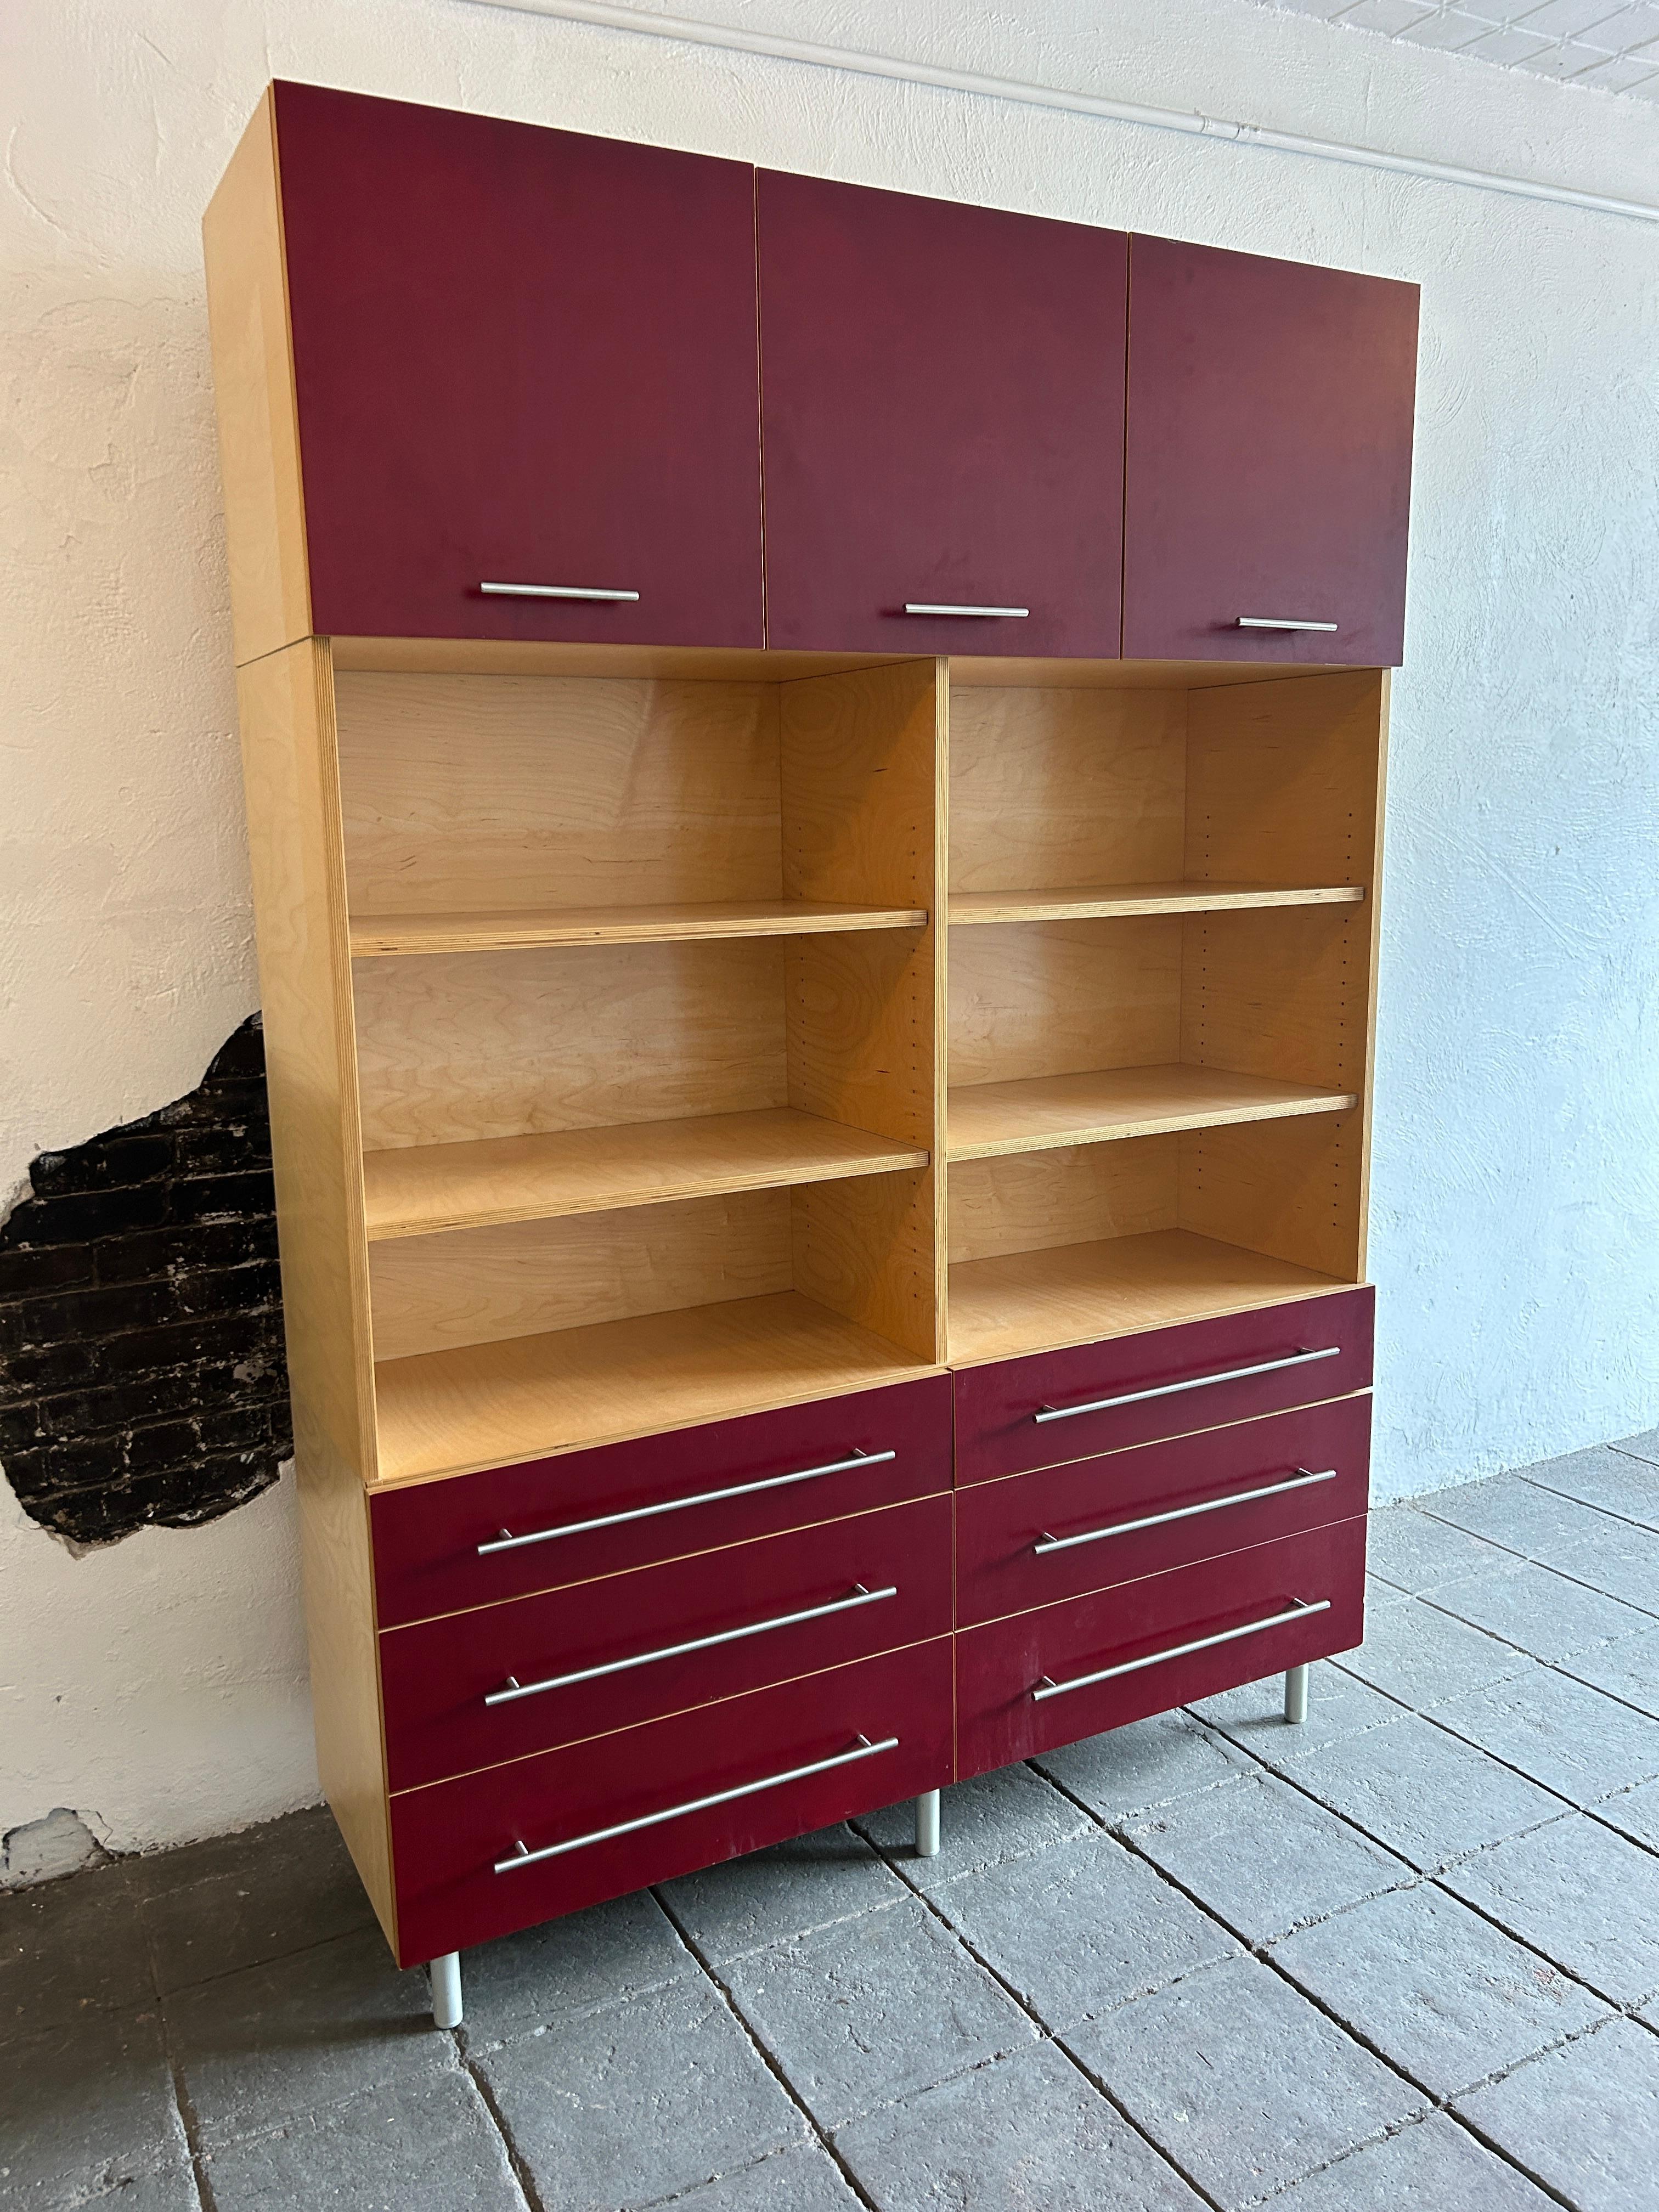 American Modern custom high end plywood wall unit dresser credenza upper cabinets shelves For Sale